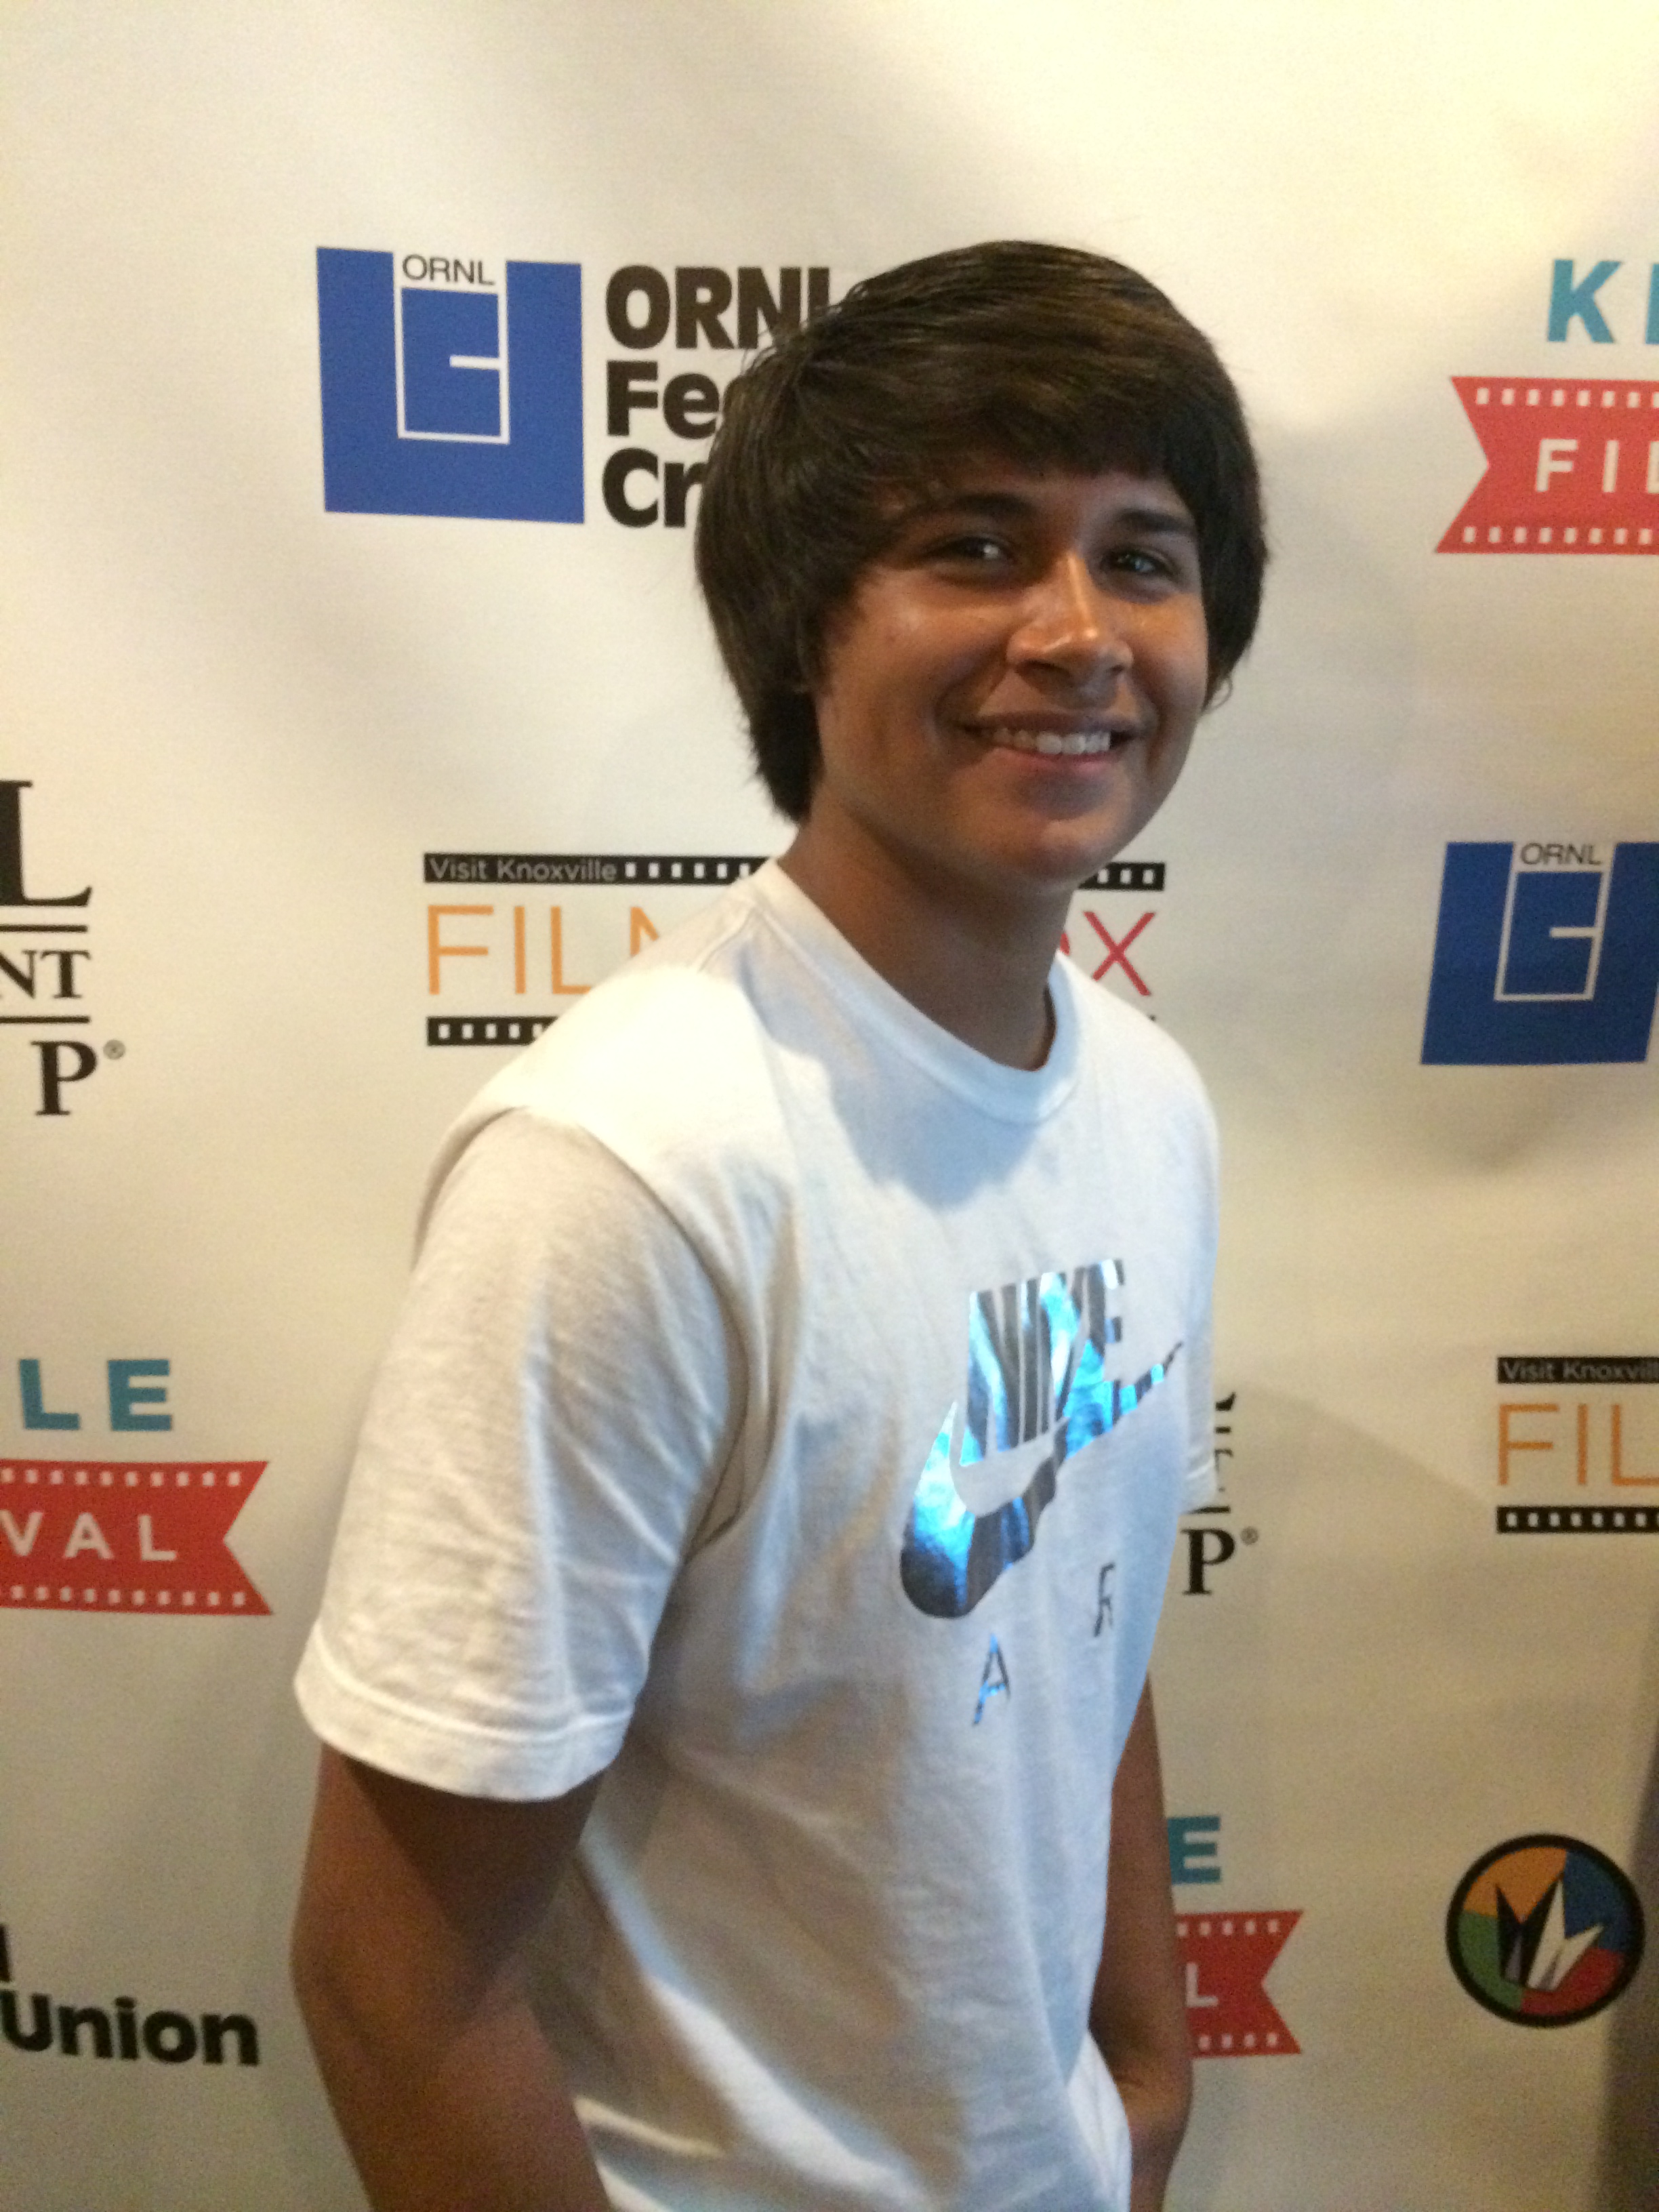 Knoxville Film Festival 2014